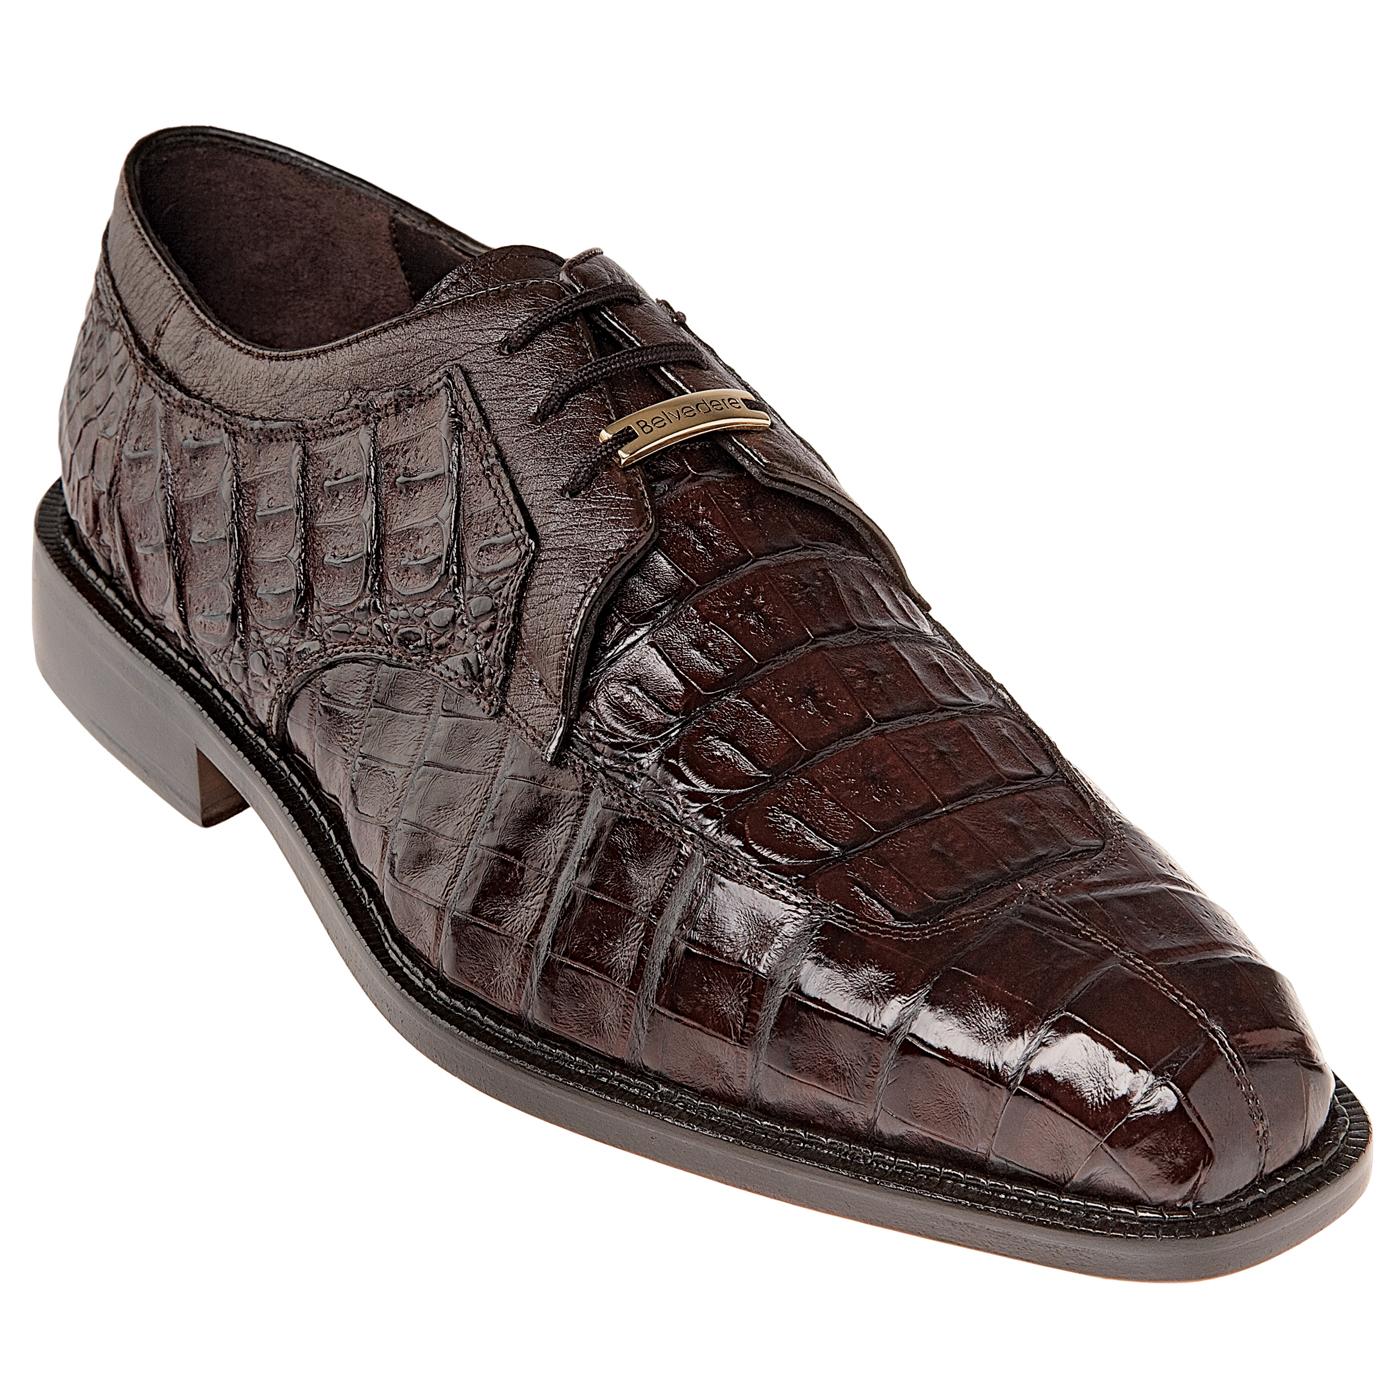 Belvedere Susa Crocodile Shoes - Brown | Upscale Menswear